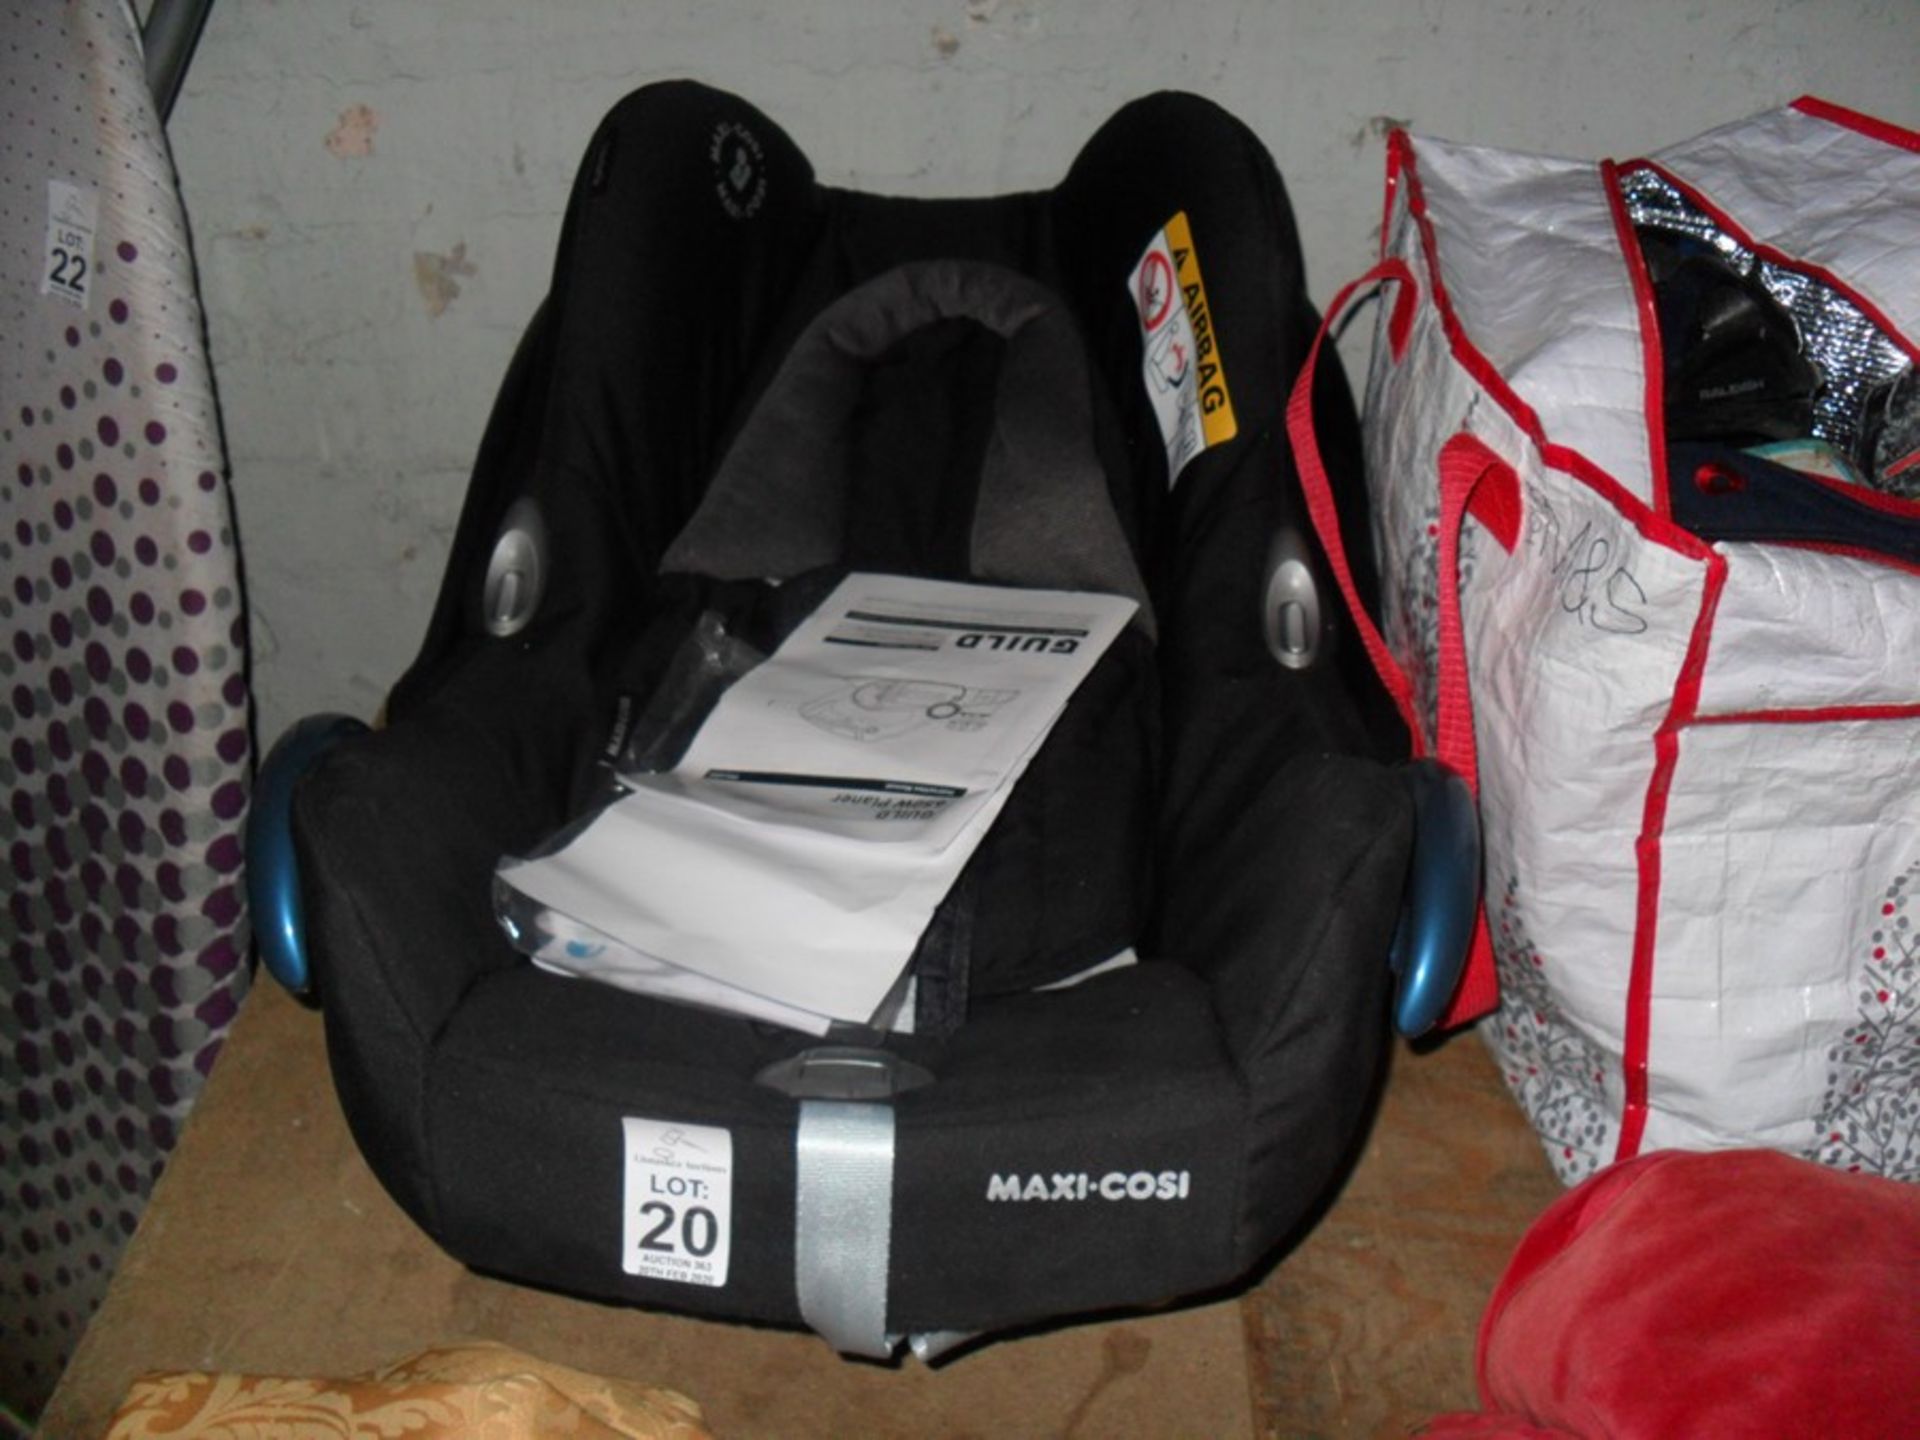 MAXI COSI BABY CAR SEAT EX-SHOP DISPLAY